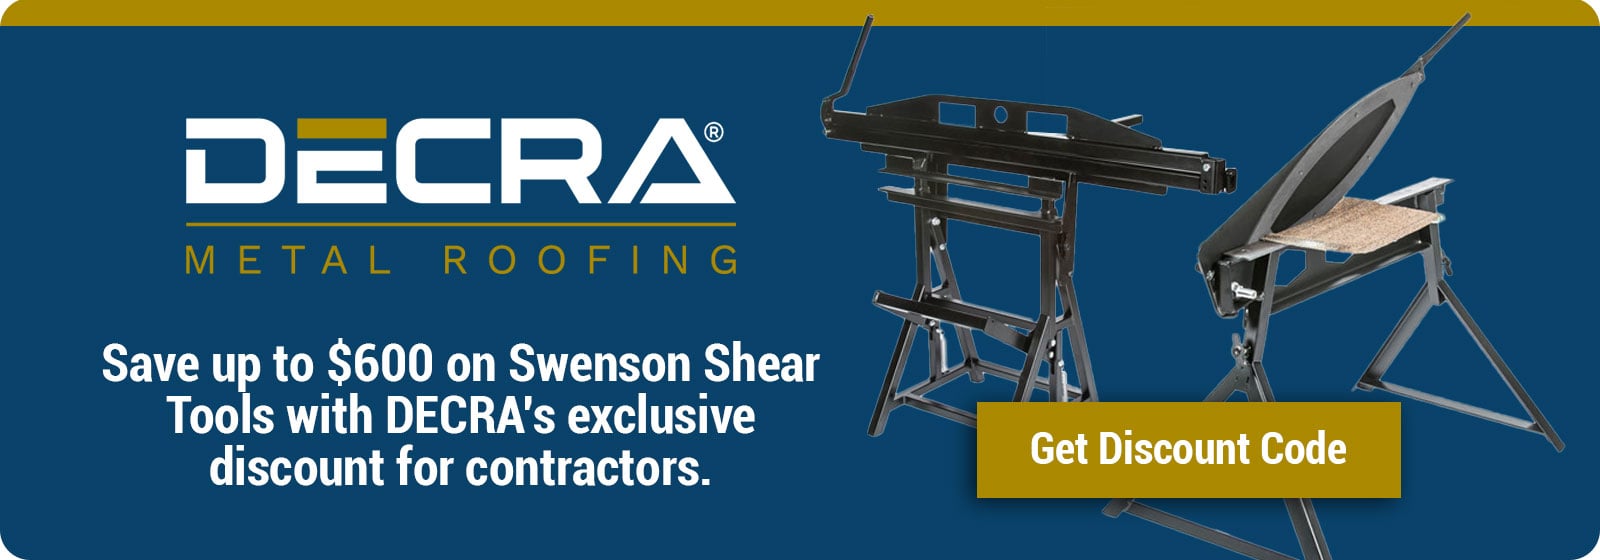 decra-metal-roofing-web-swenson-shear-discount-blog-cta-2